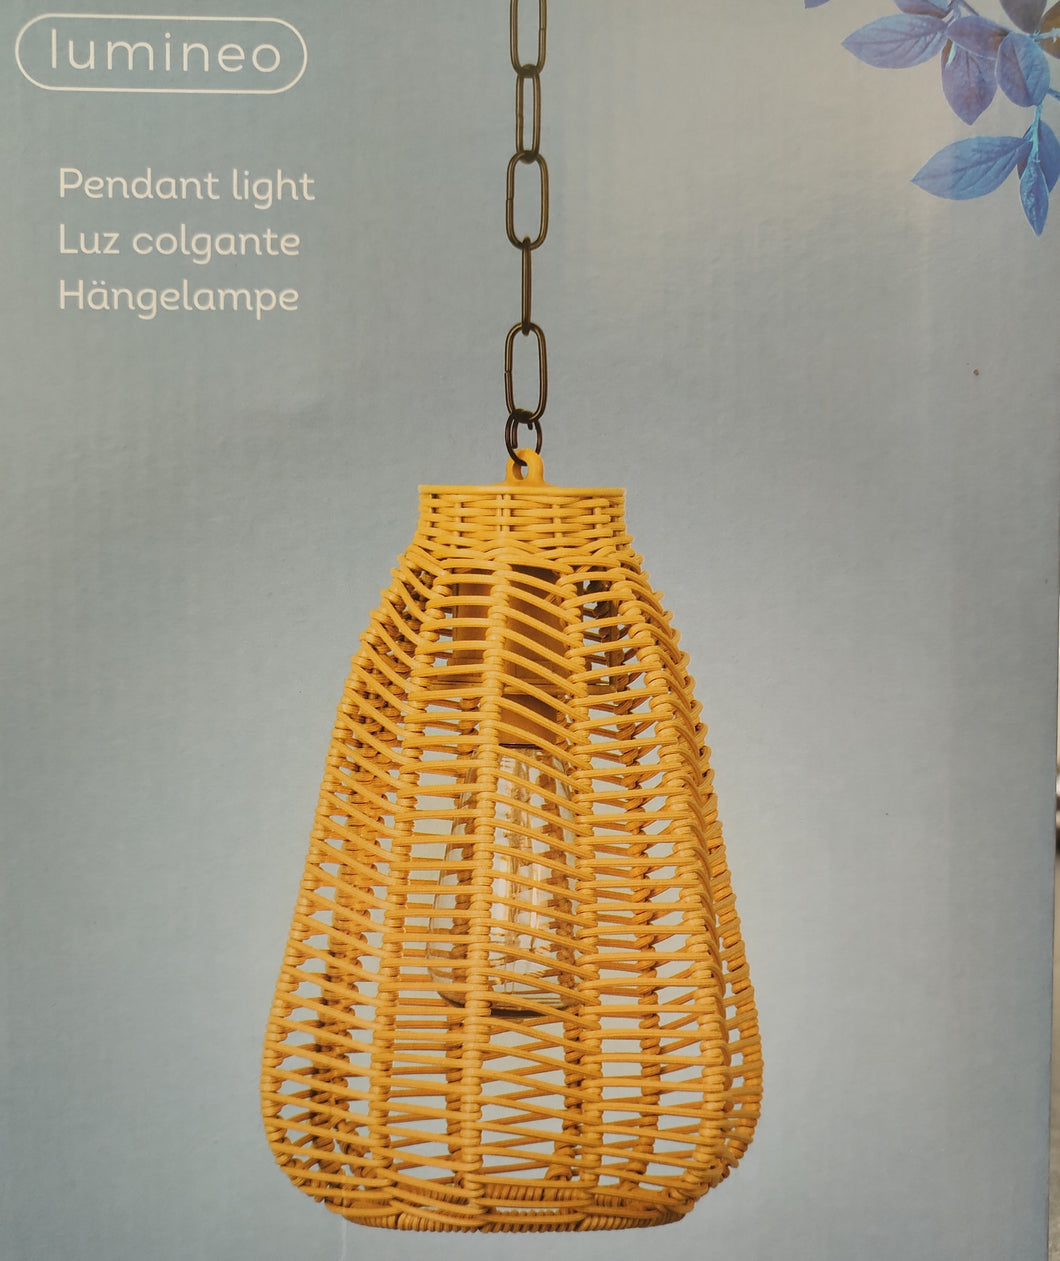 Lumineo LED wicker pendant light (ReqBattery)